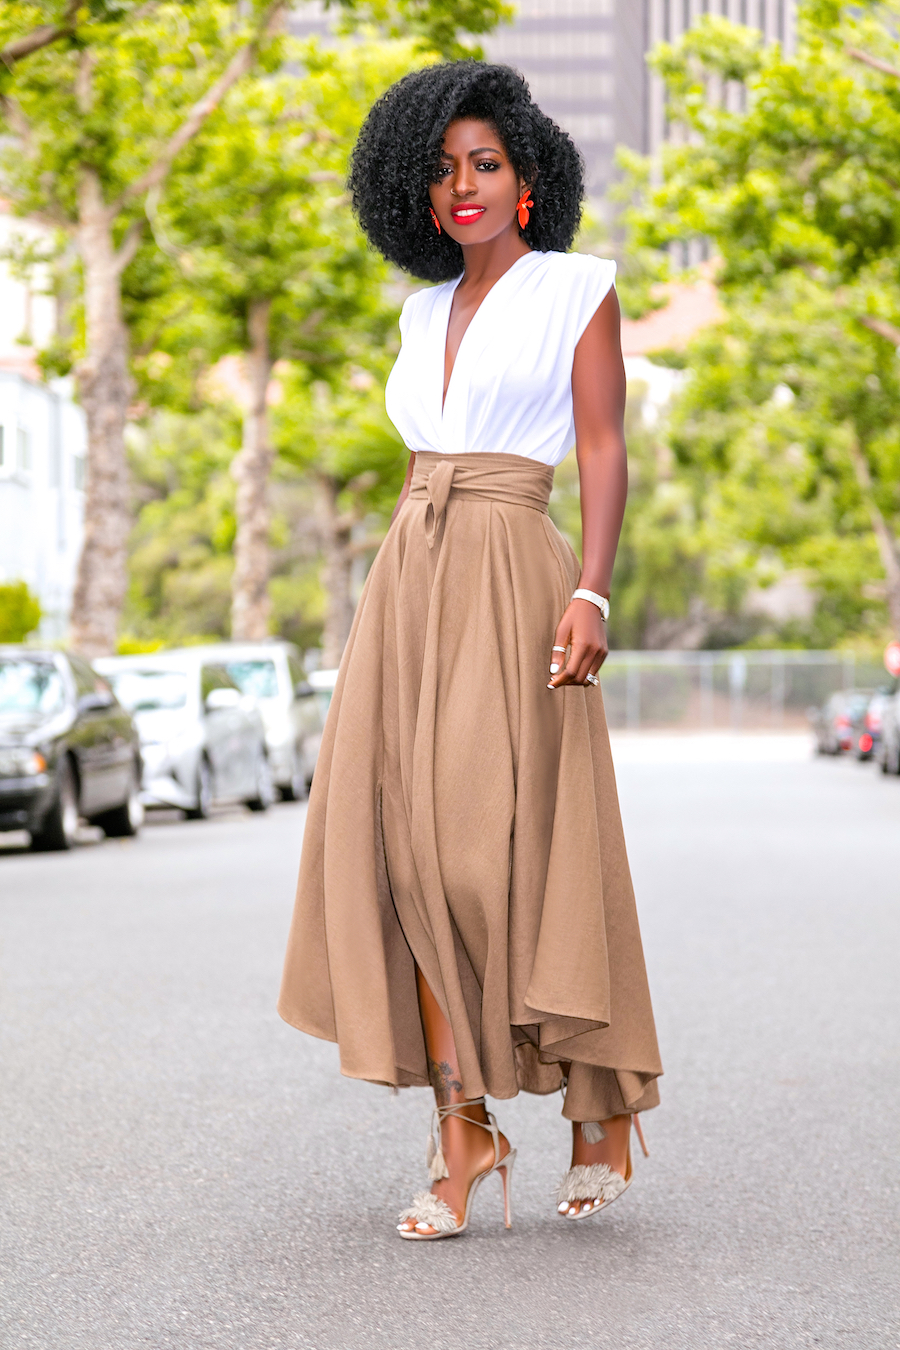 Style Pantry | Draped Bodysuit + High Waist Belted Midi Skirt